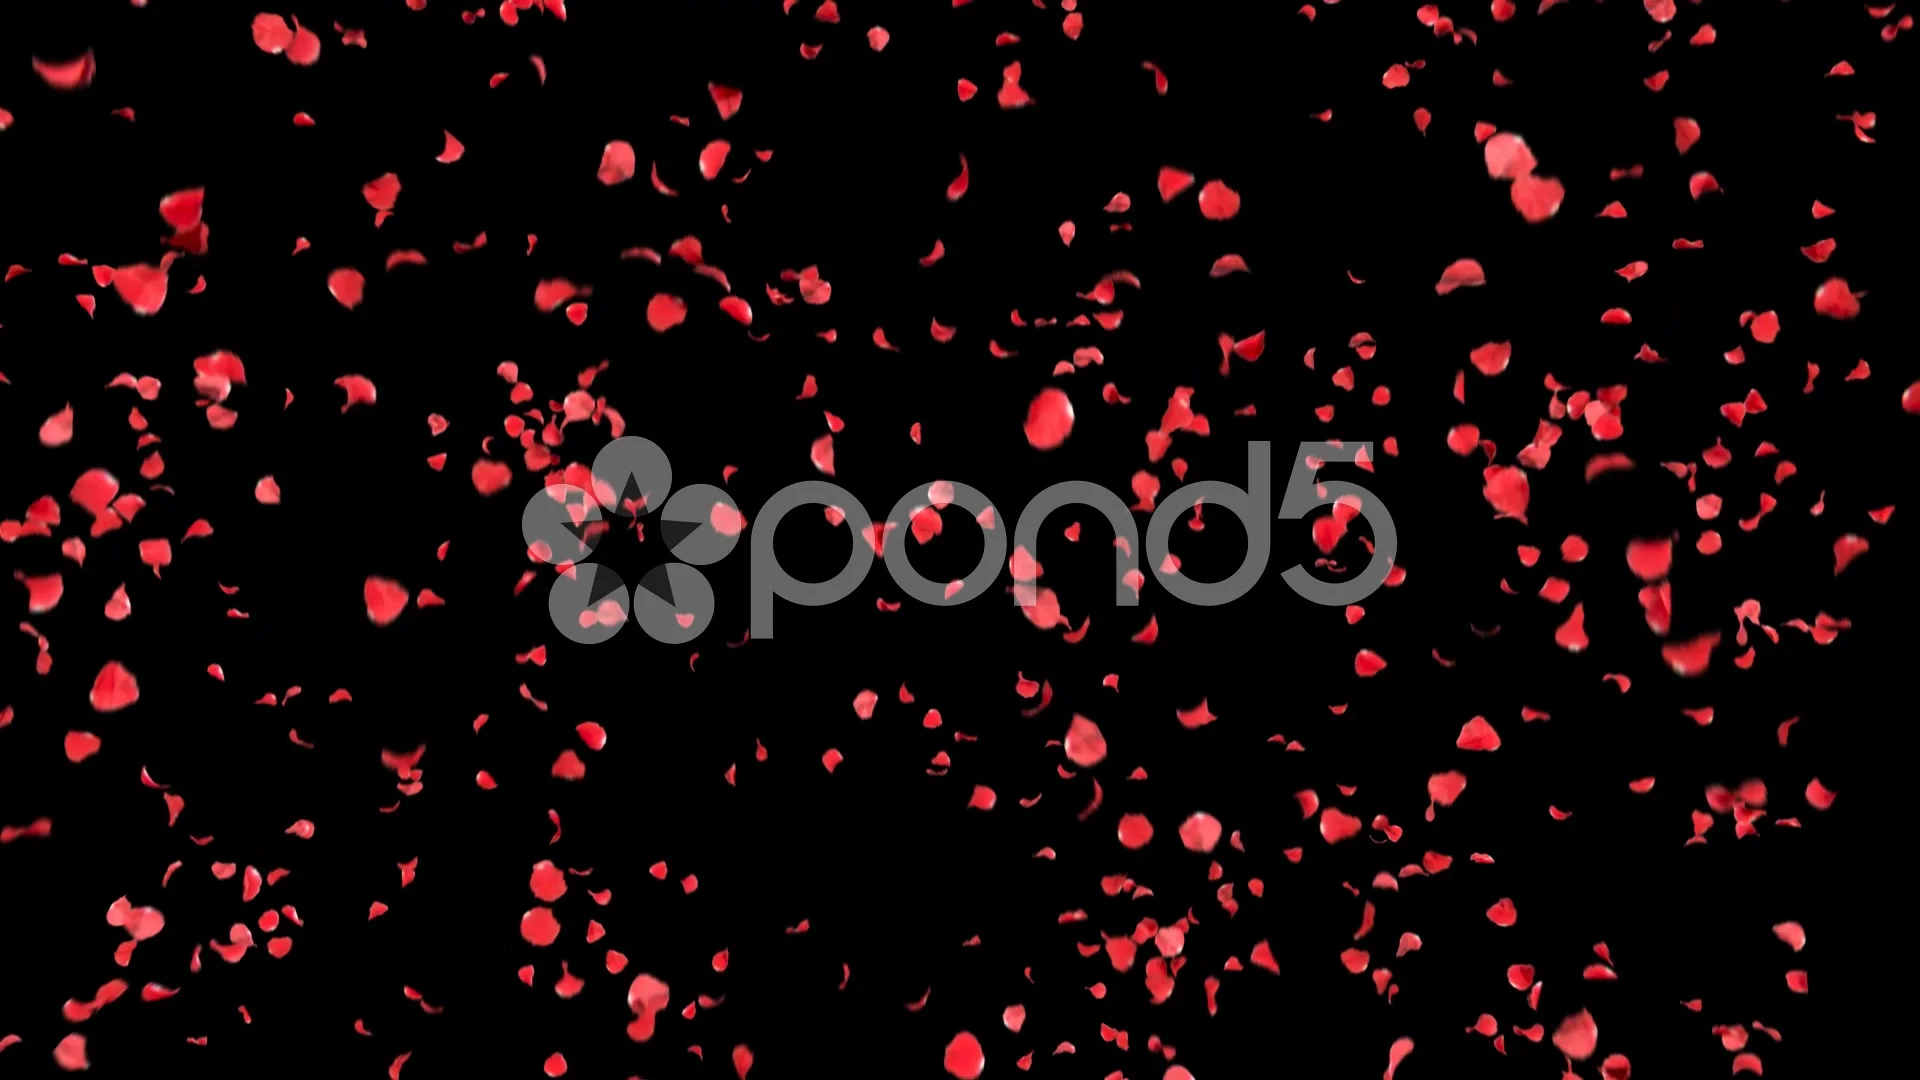 4,368 Rose Petals Falling Black Background Images, Stock Photos, 3D  objects, & Vectors